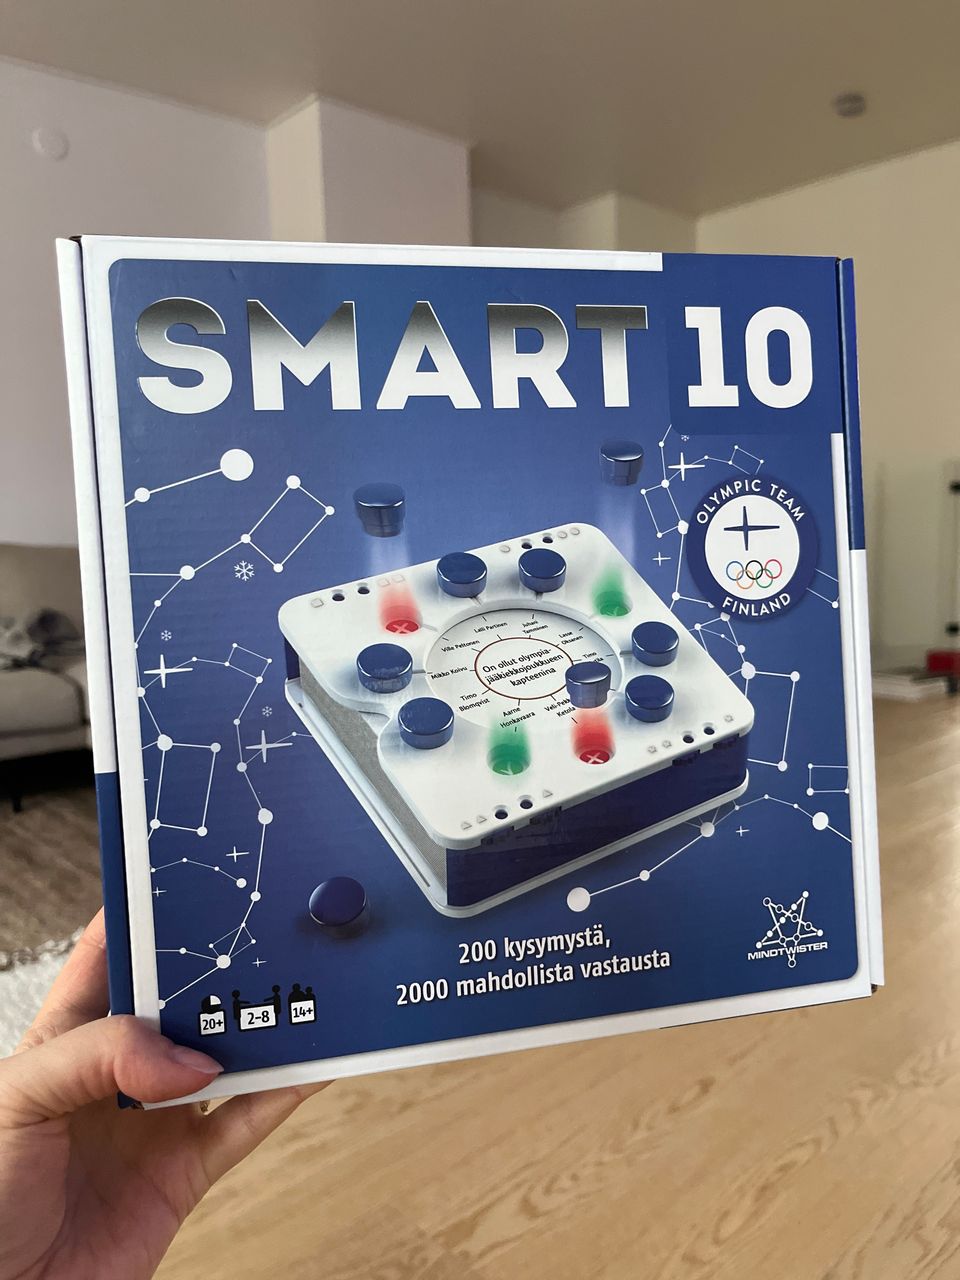 Smart 10 Olympia -tietopeli